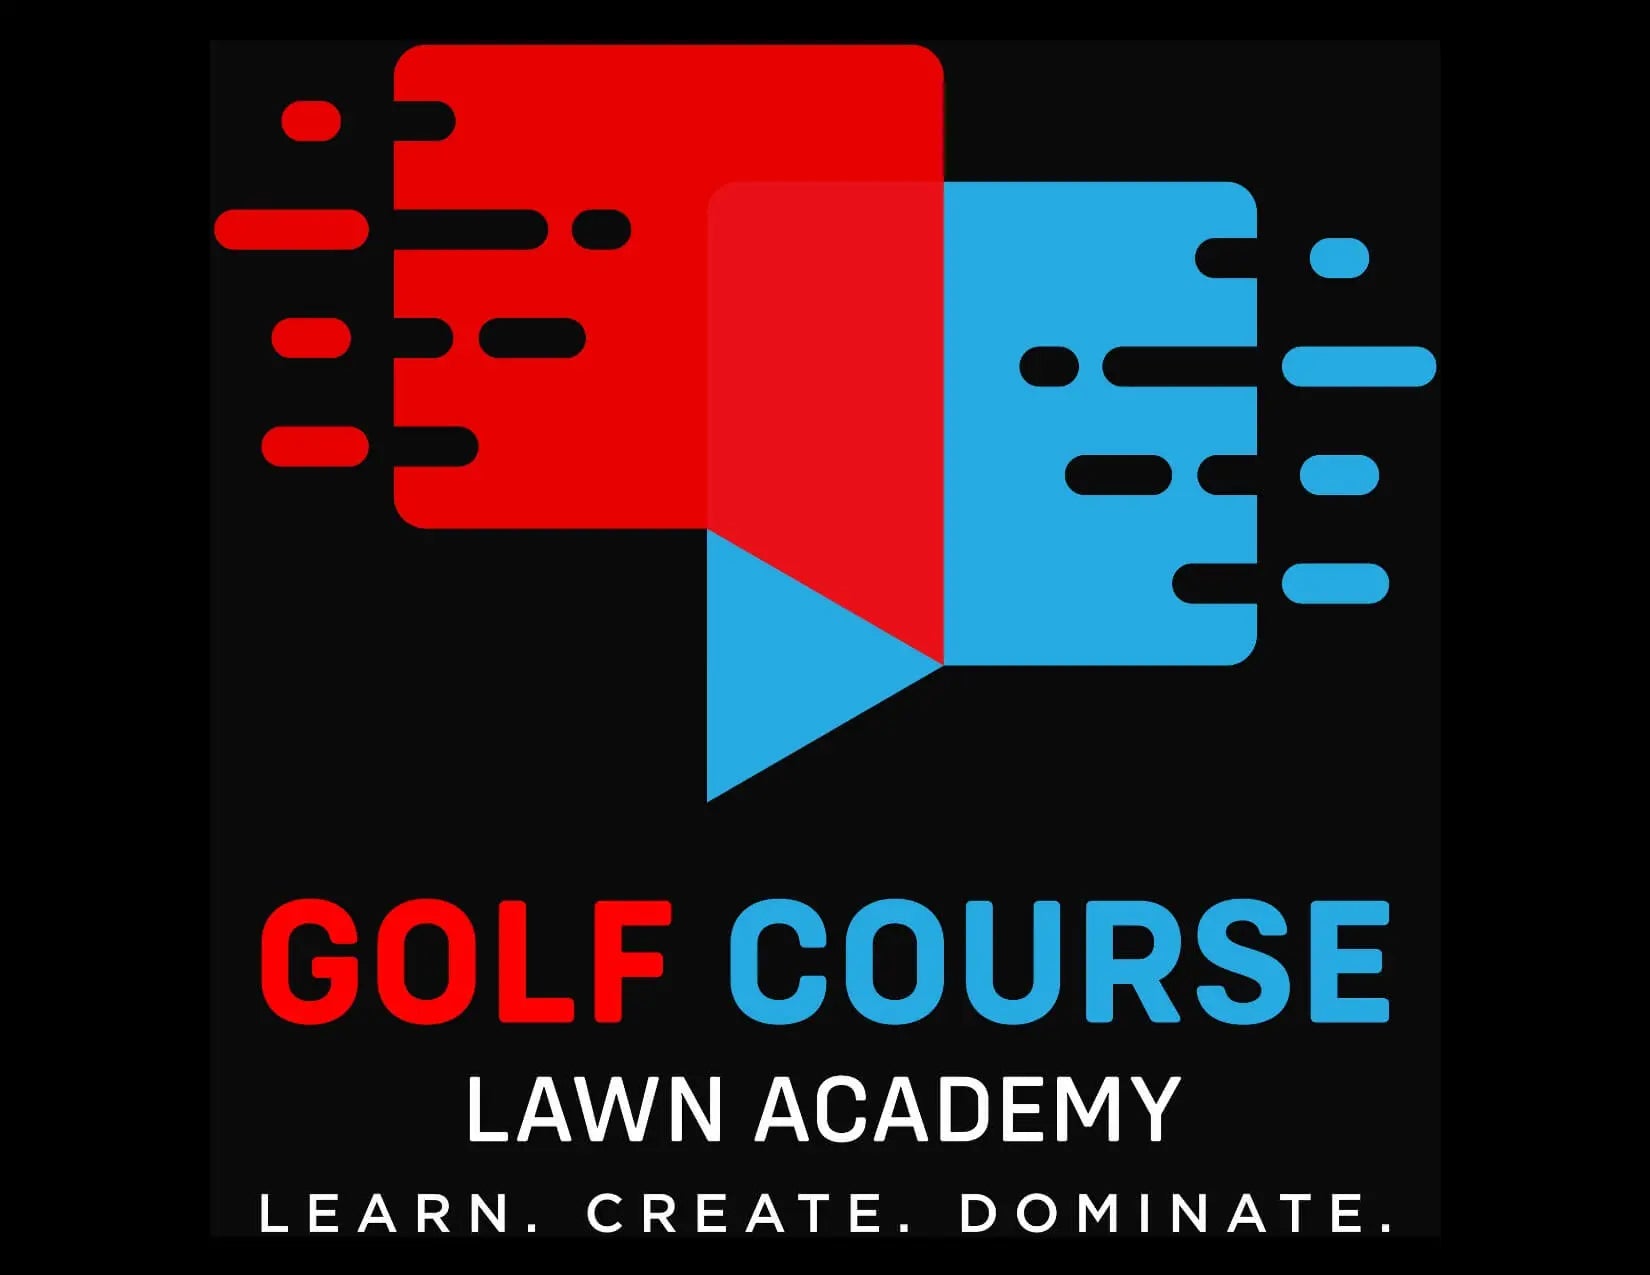 Golf Course Lawn Academy